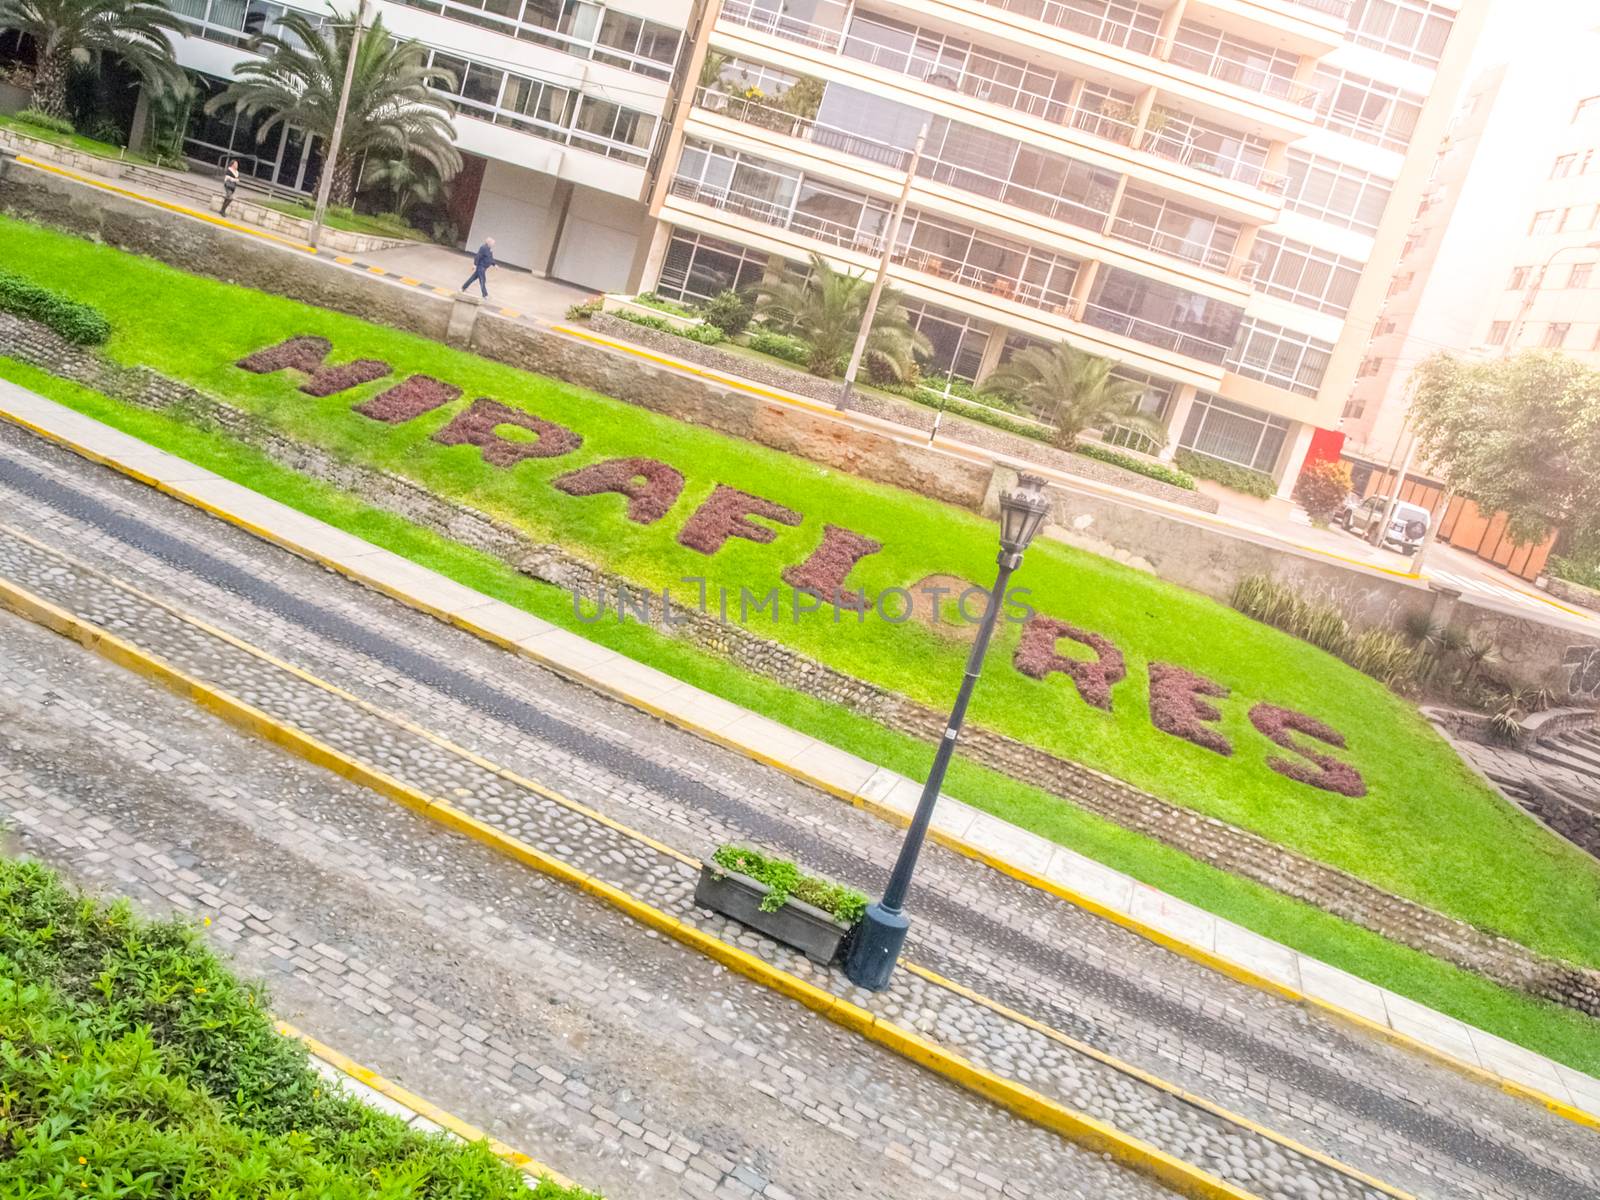 Miraflores district. Street and greenery, Lima Peru